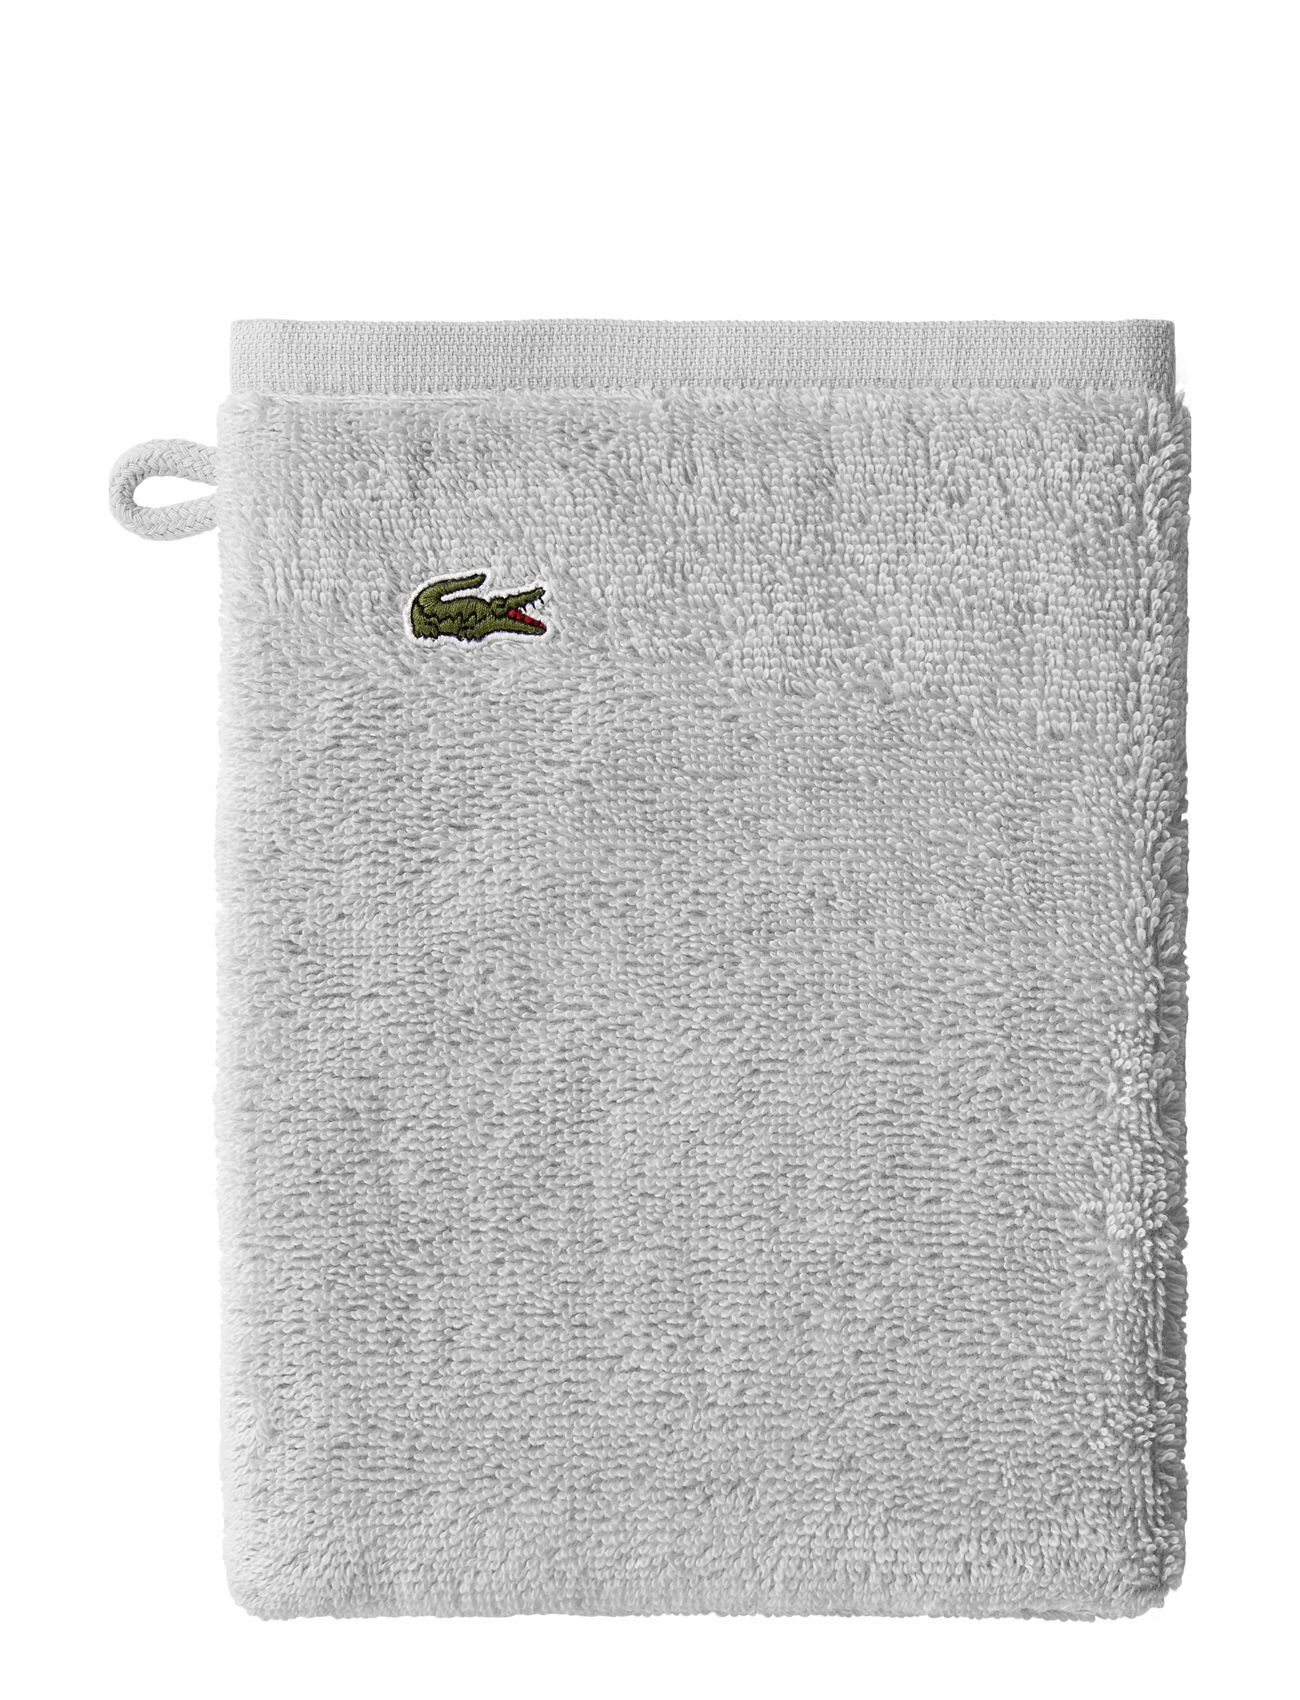 Lacoste Home Llecroco Mitt Home Textiles Bathroom Textiles Towels Grå Lacoste Home